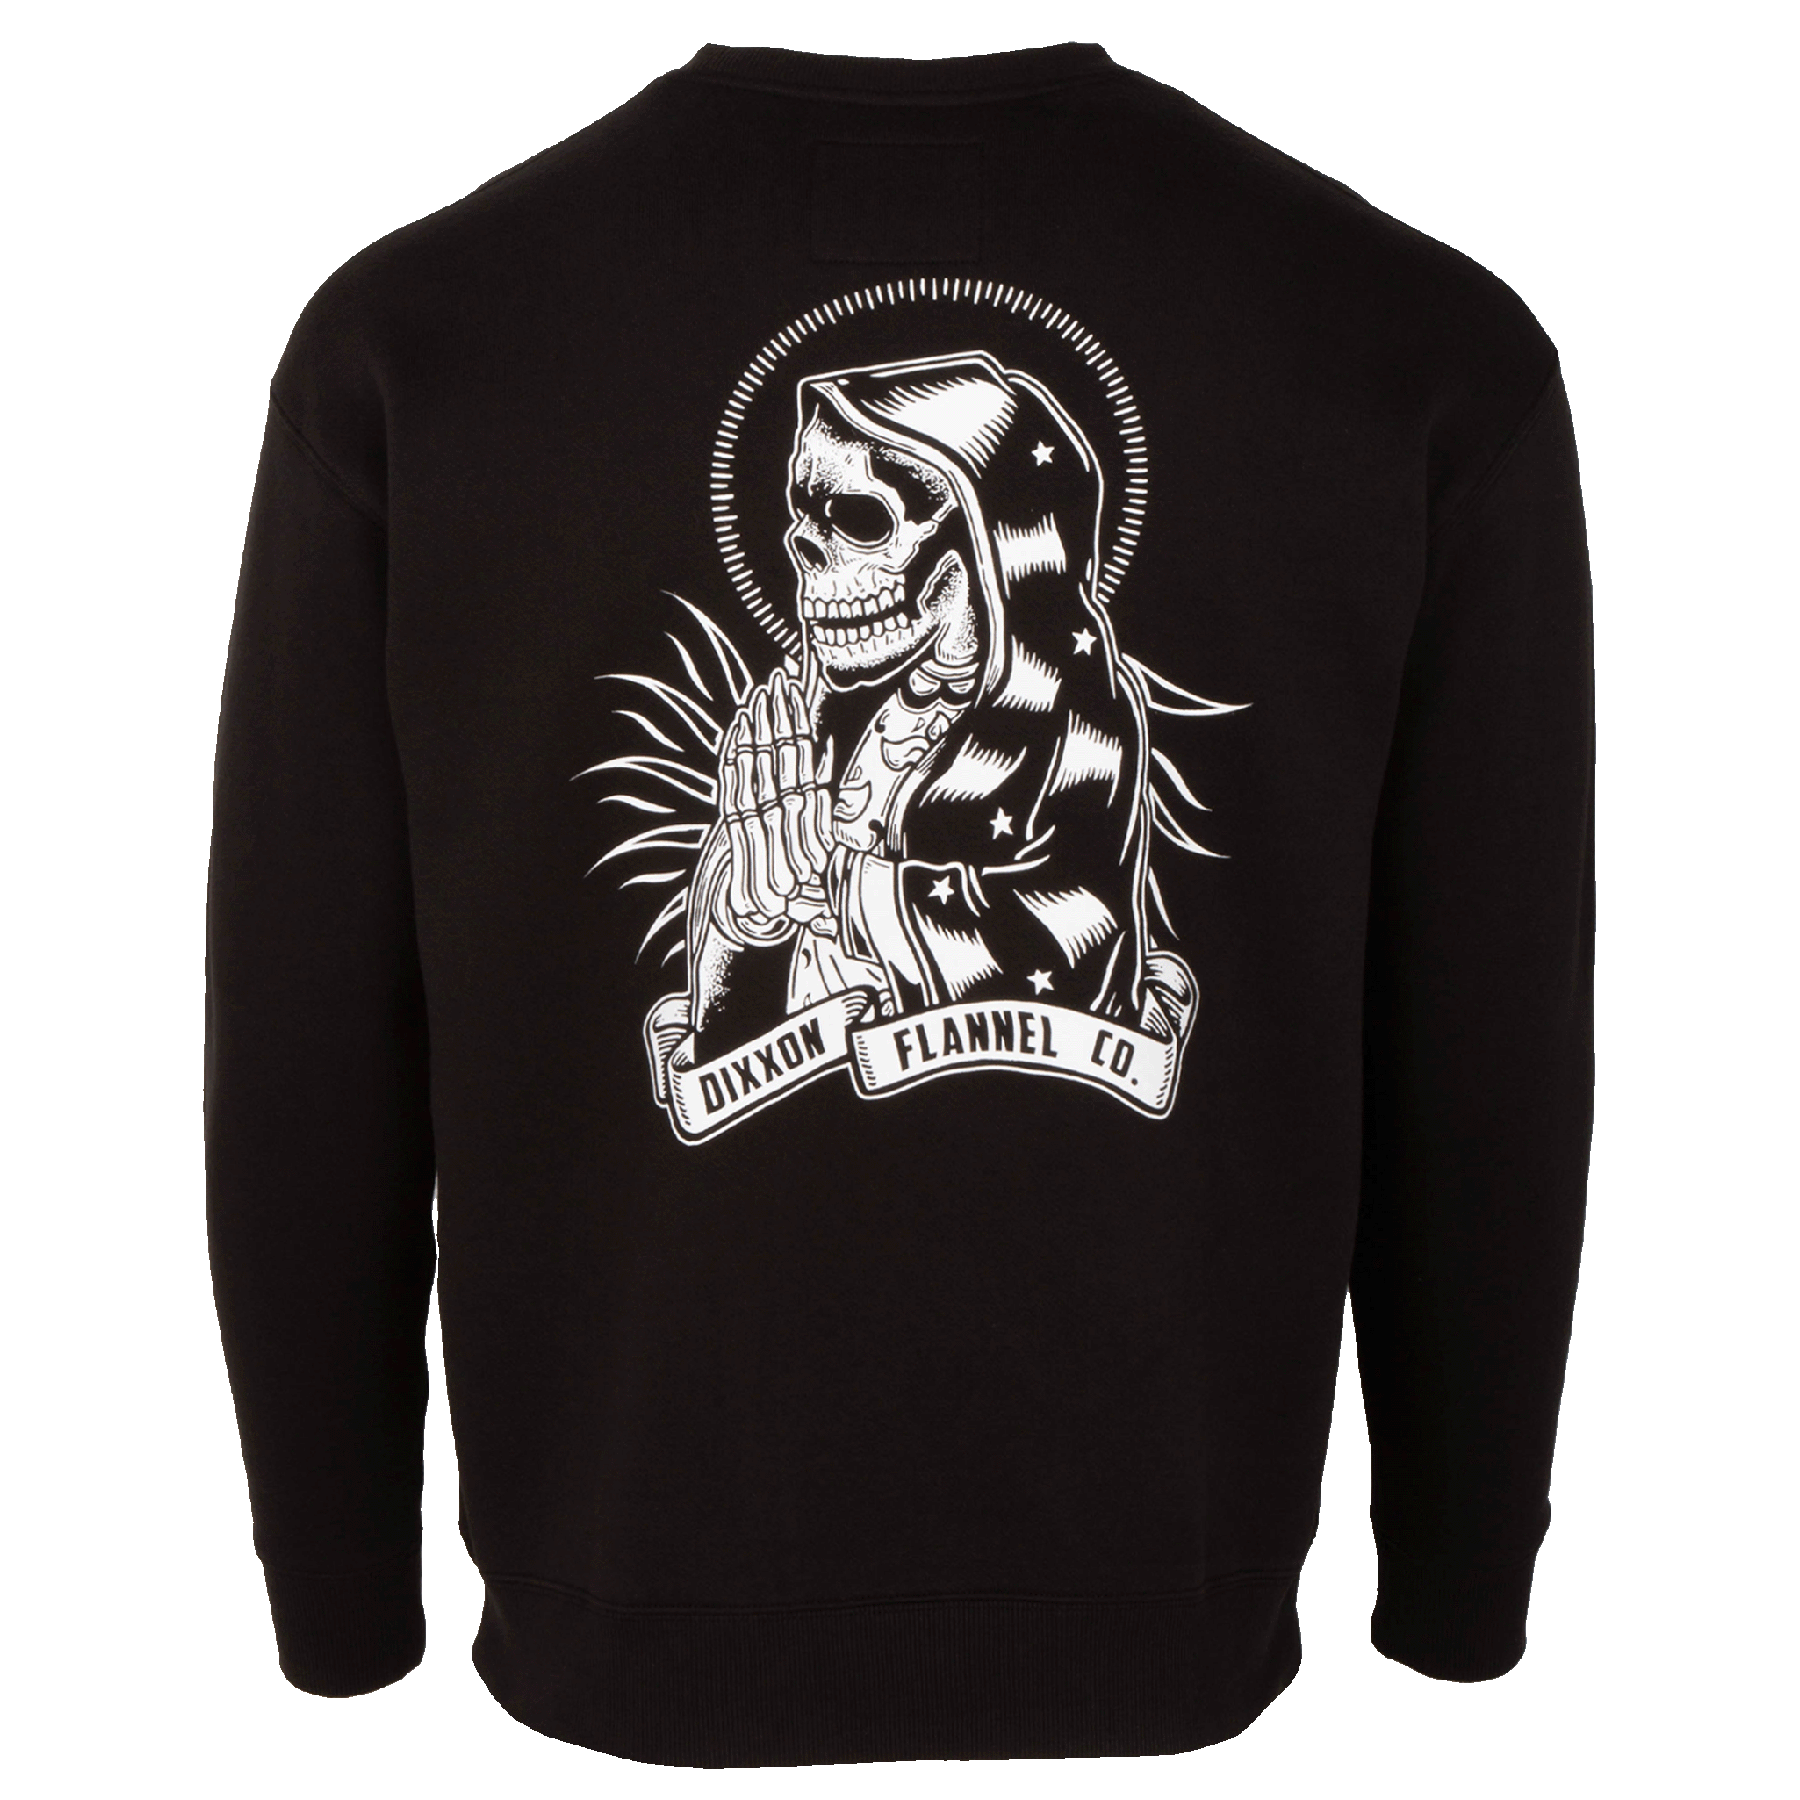 Santa Muerte Crewneck Sweatshirt - Dixxon Flannel Co.